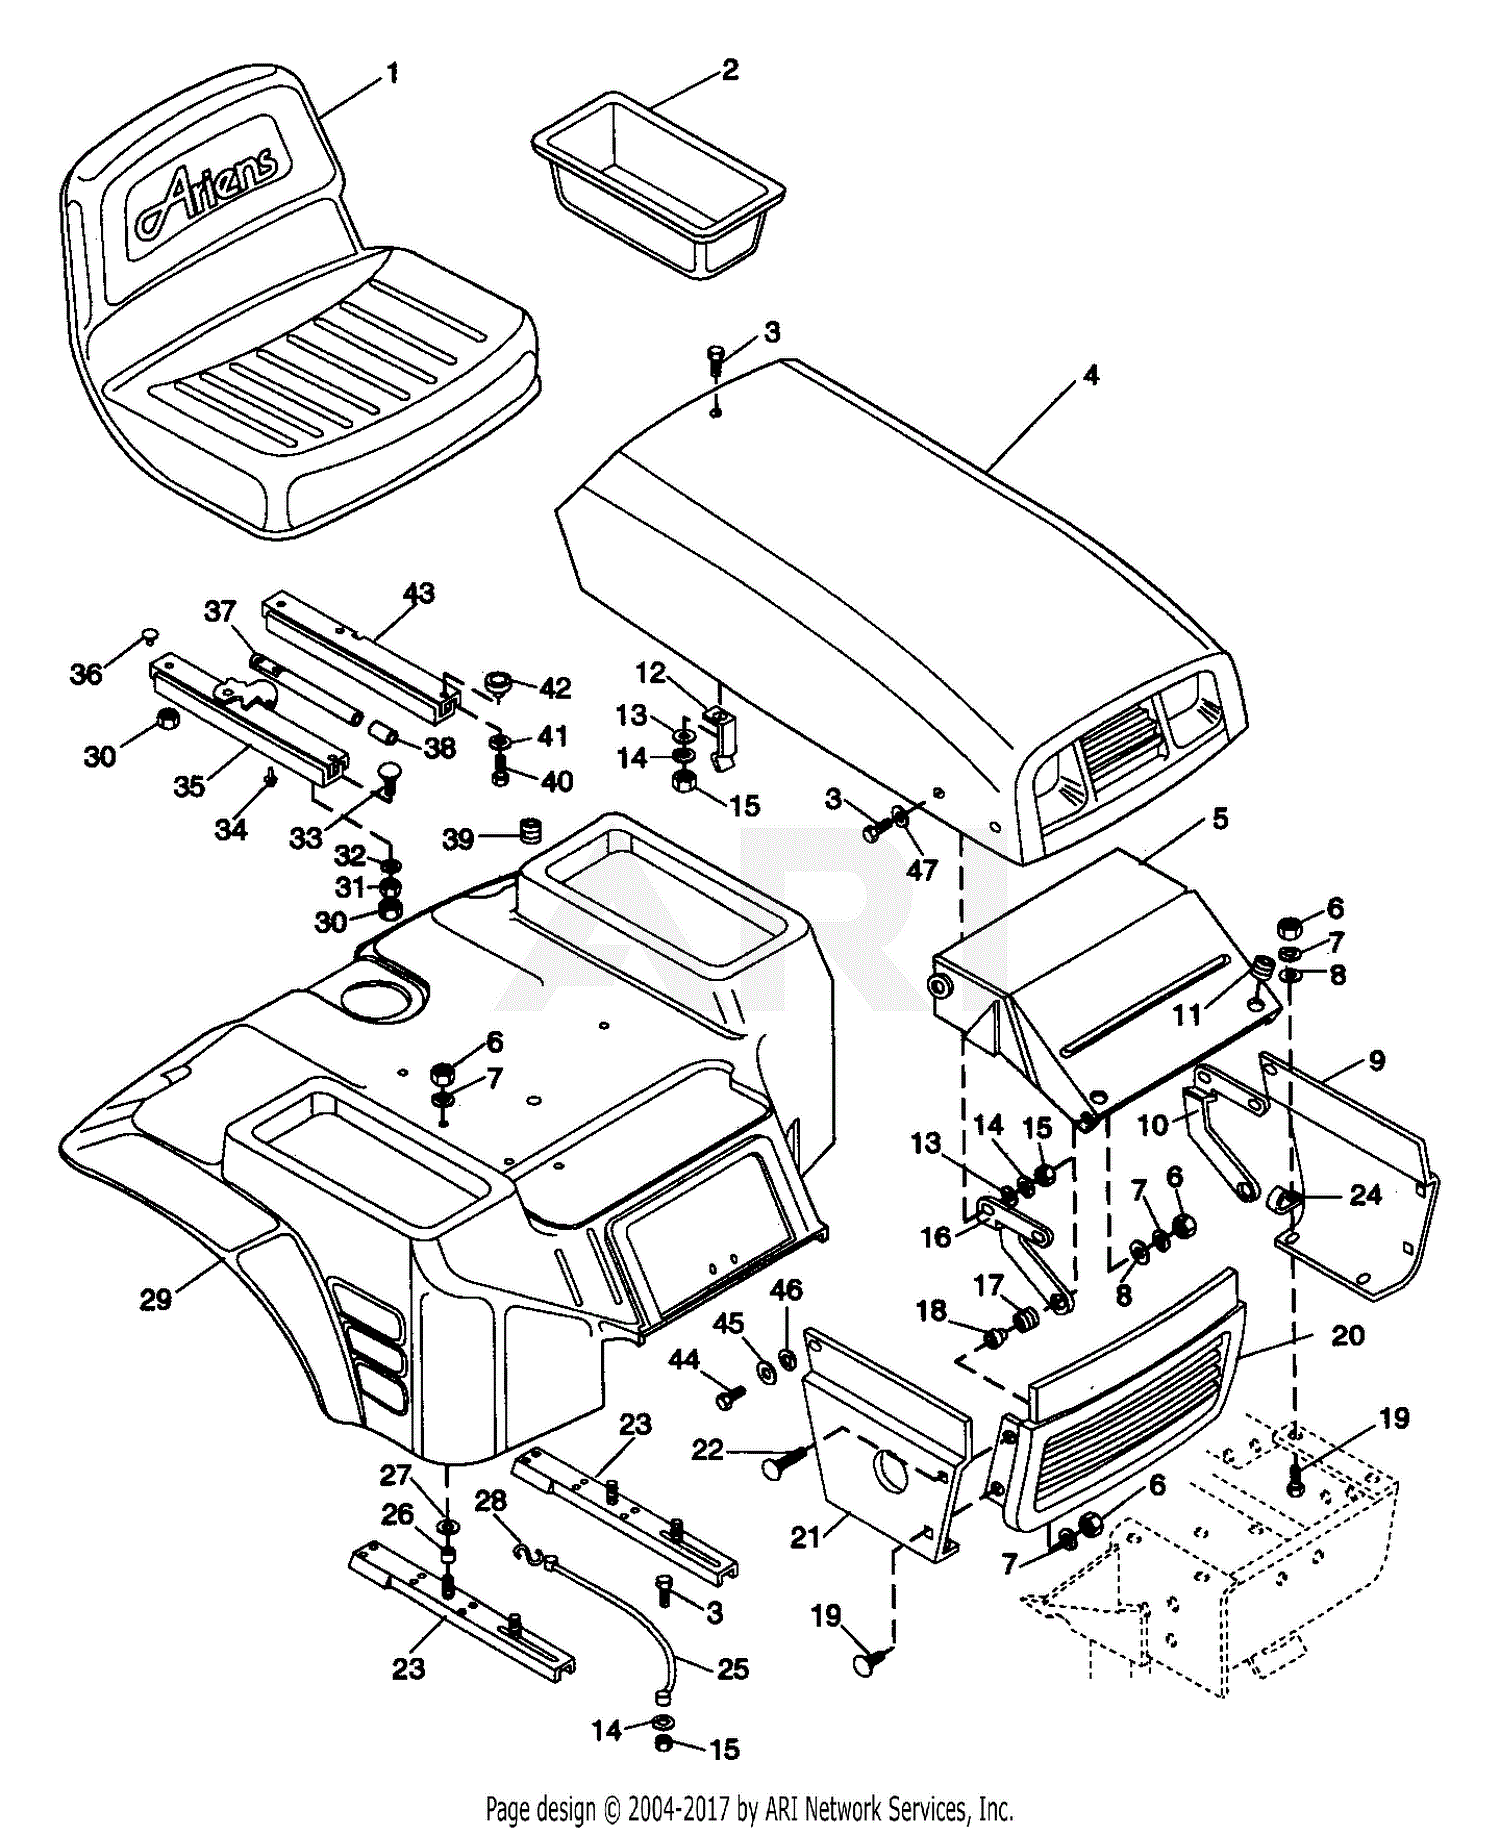 Gt18 Wiring Diagram. 1970 sears suburban voltage regulator wiring